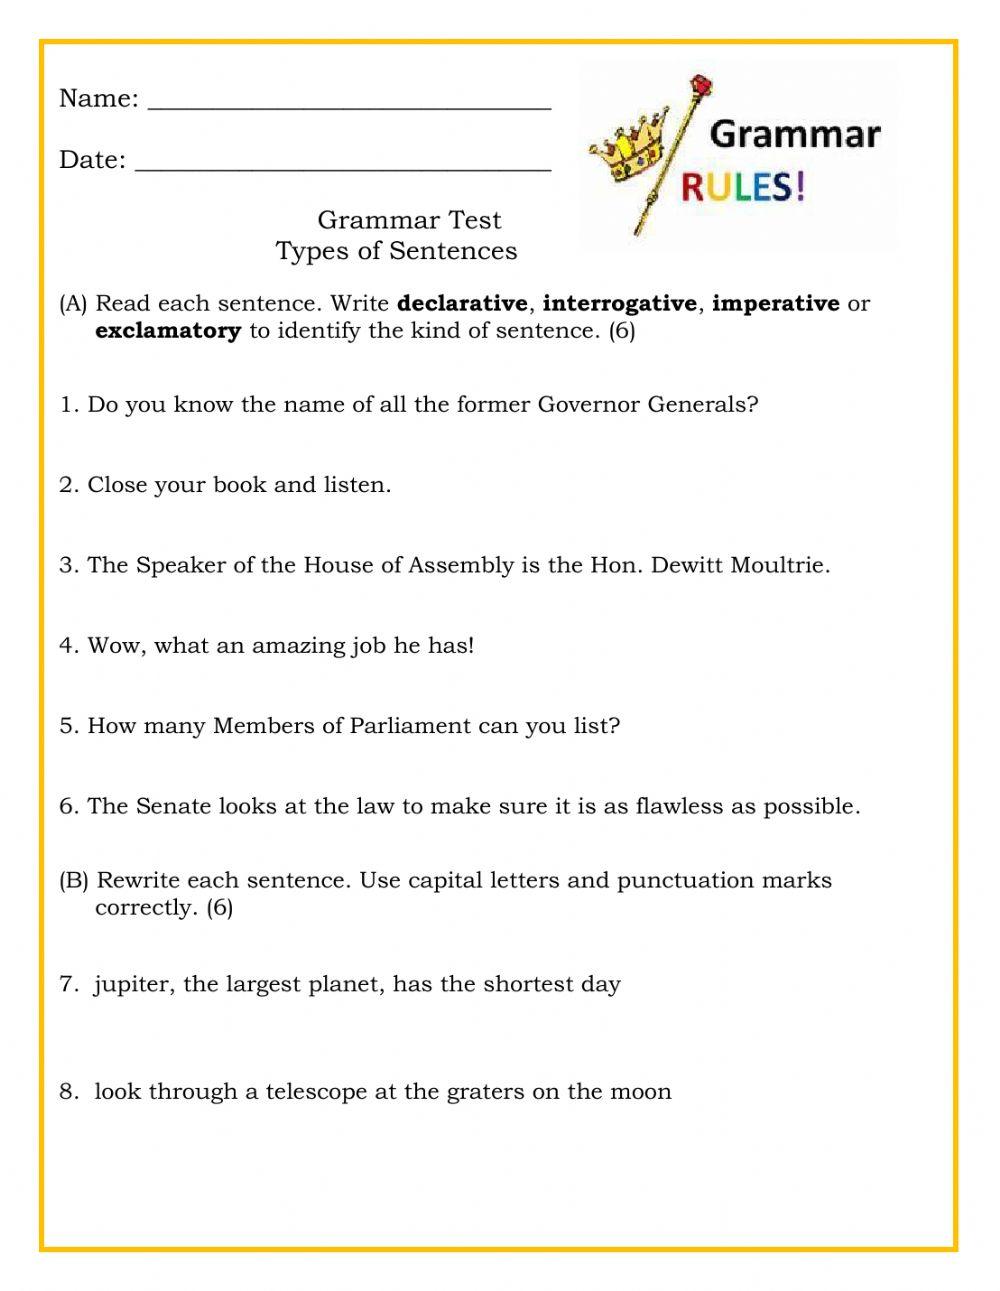 Types of Sentences Test